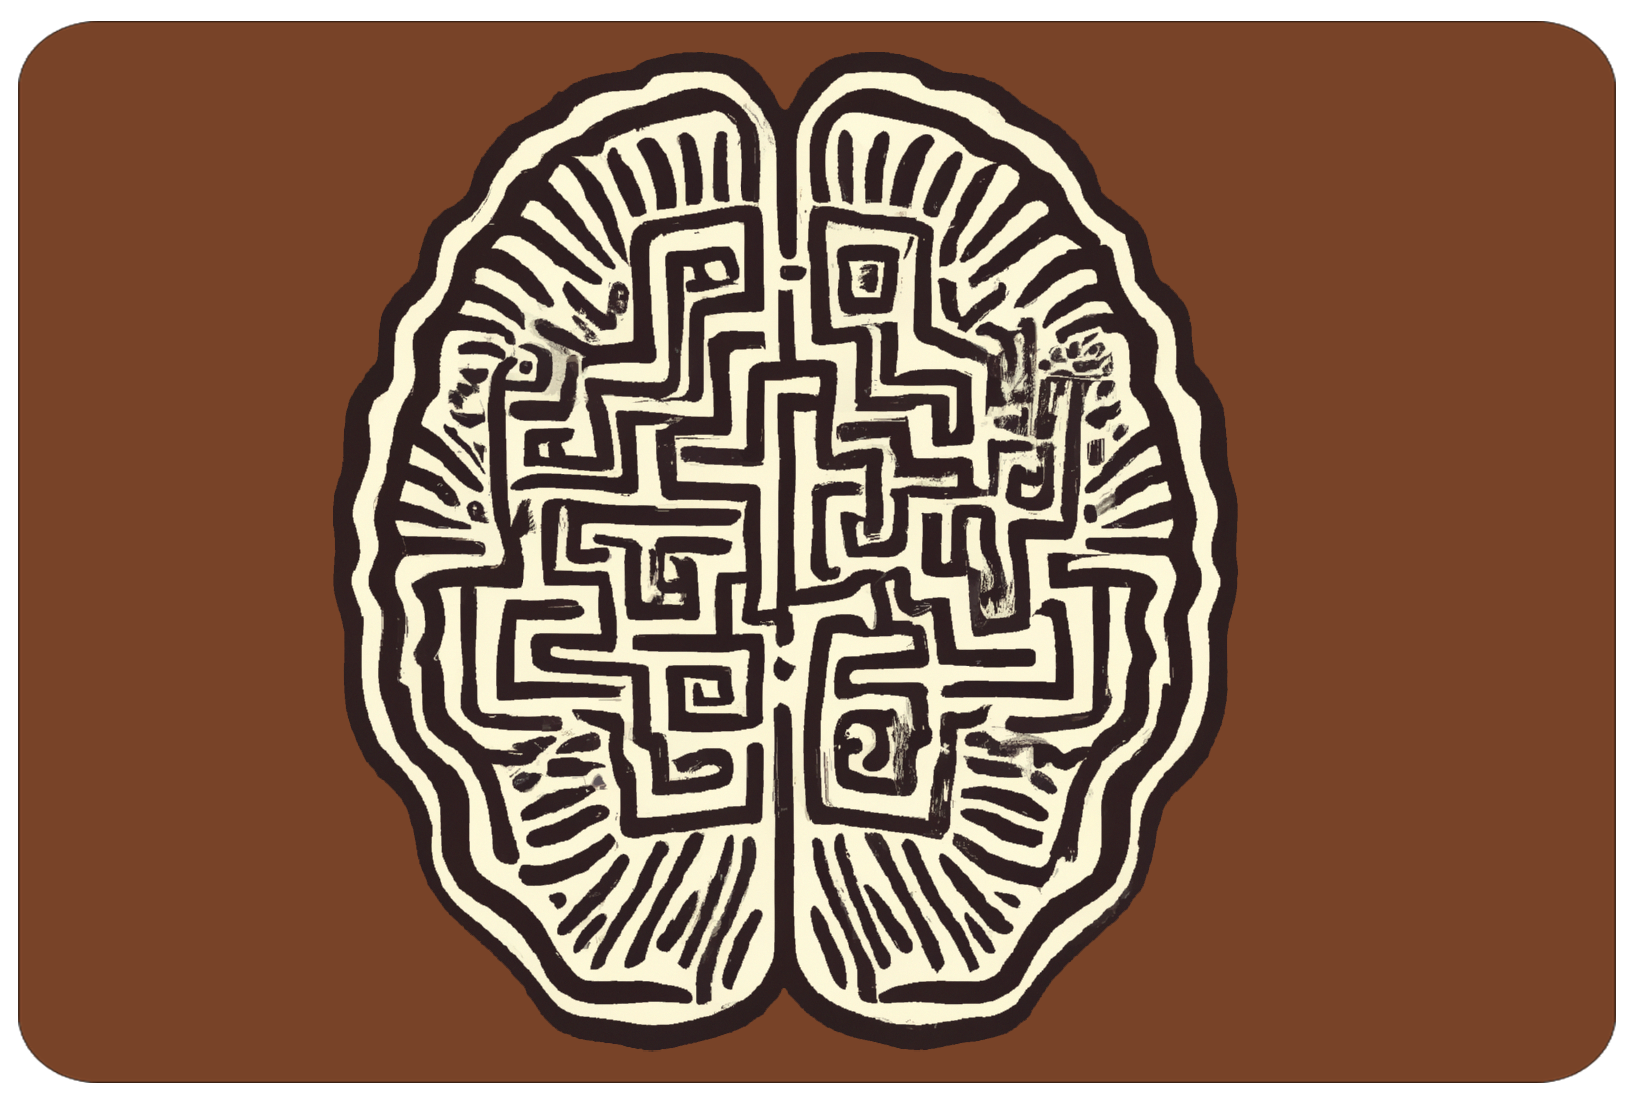 DALL·E2-2022-09-08-11.49.17---a-maze-in-the-shape-of-a-brain-in-aboriginal-art